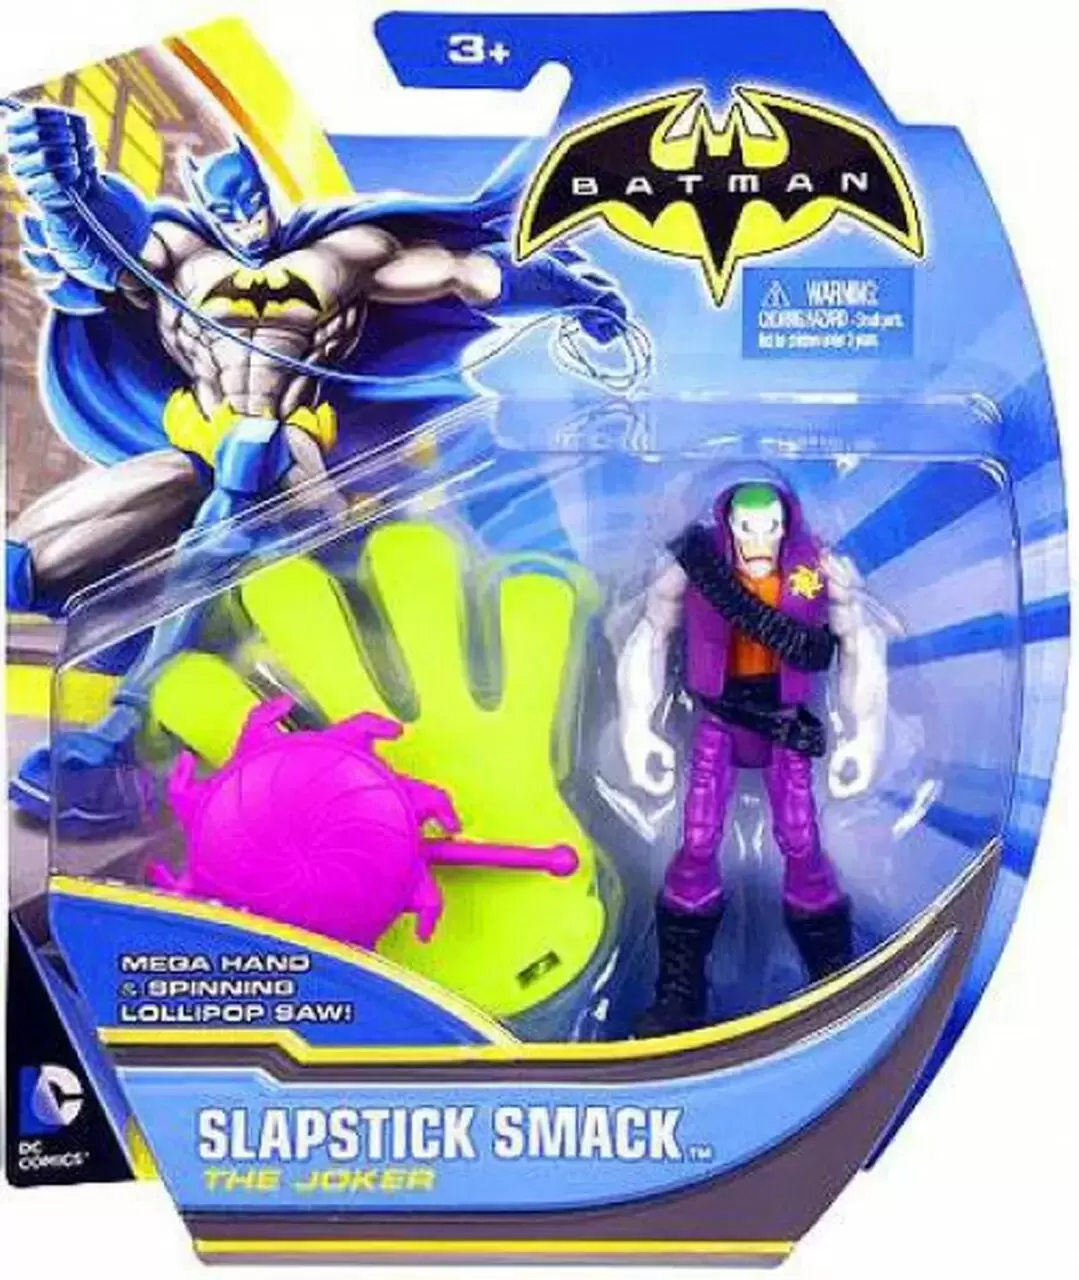 Slapstick Smack The Joker - Batman Unlimited action figure